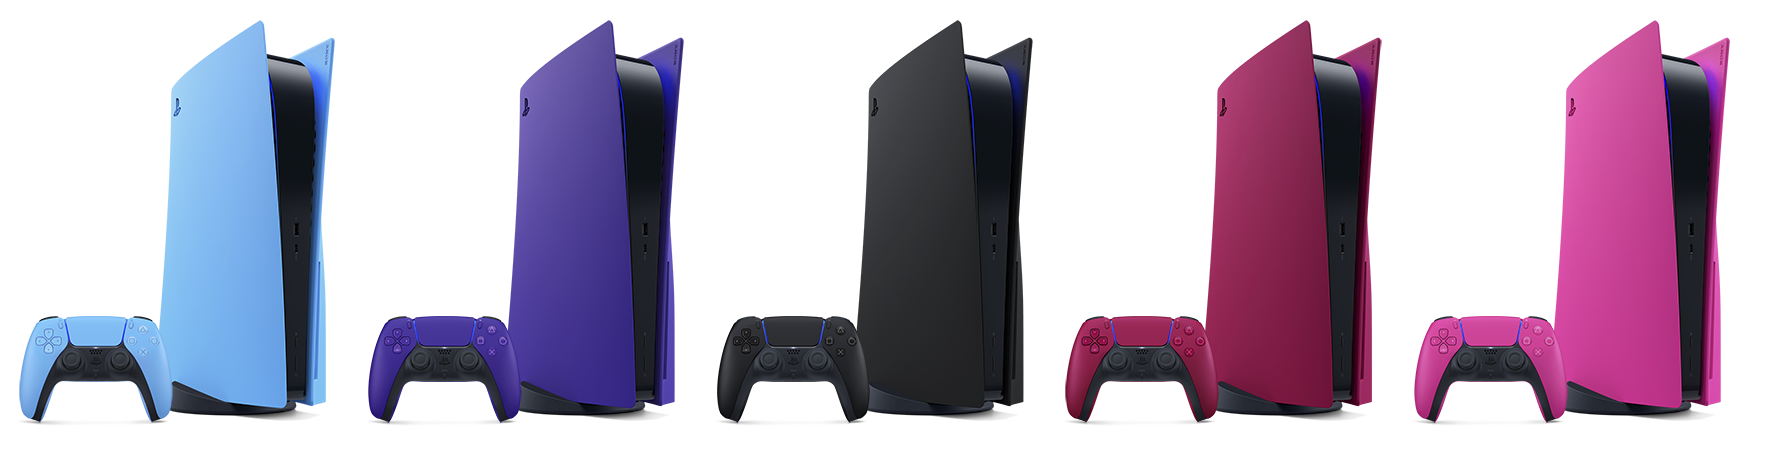 Cinque diverse cover colorate per PS5